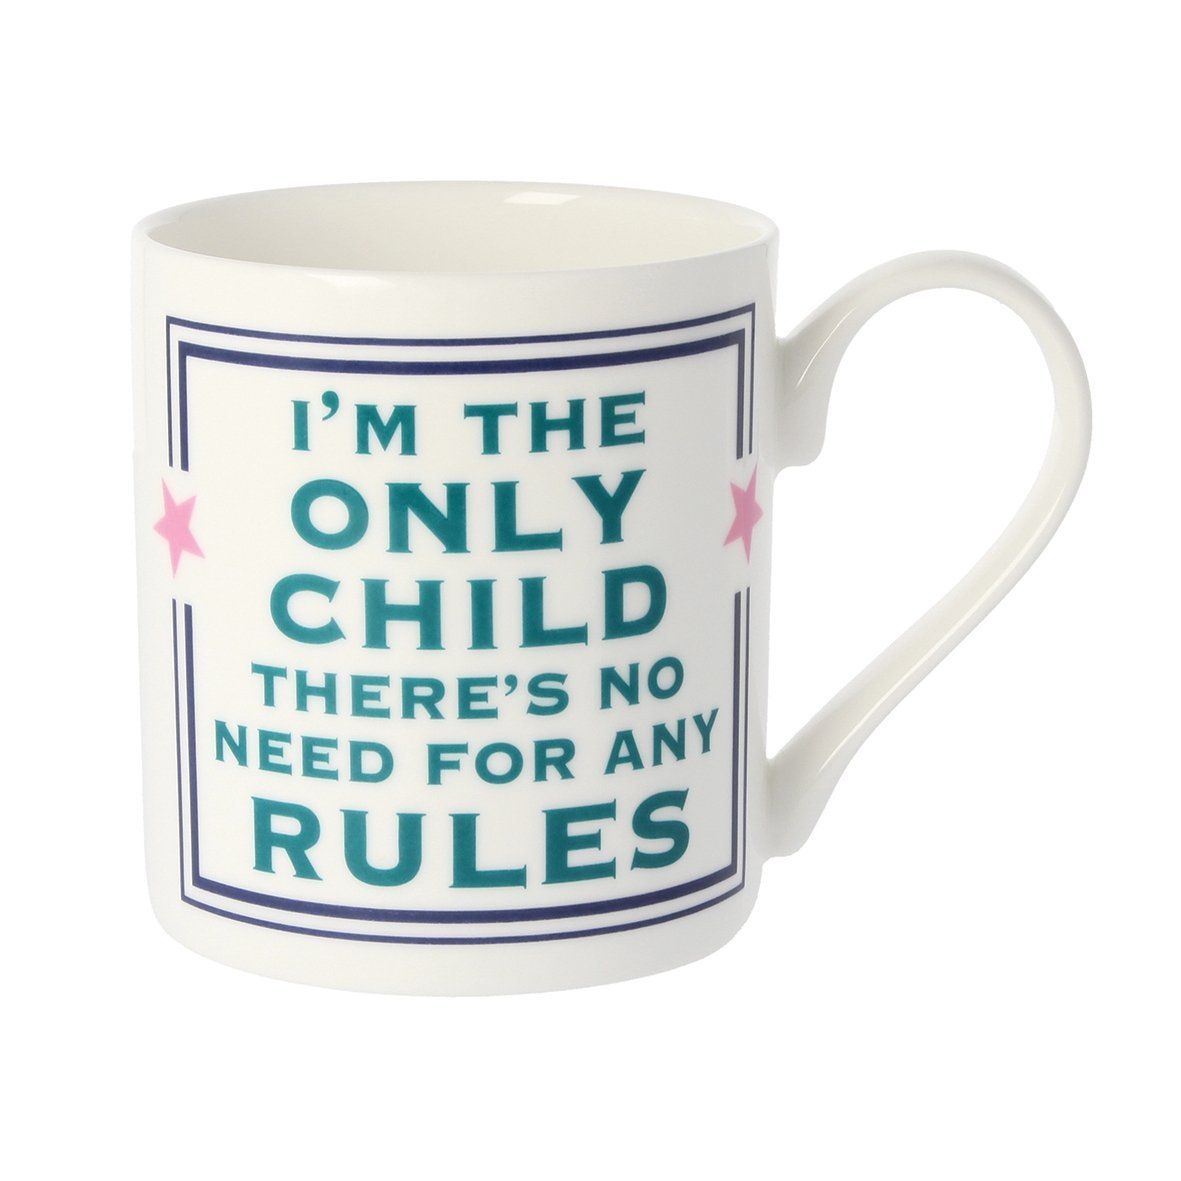 I'm The Only Child Mug by Cammy Thomson